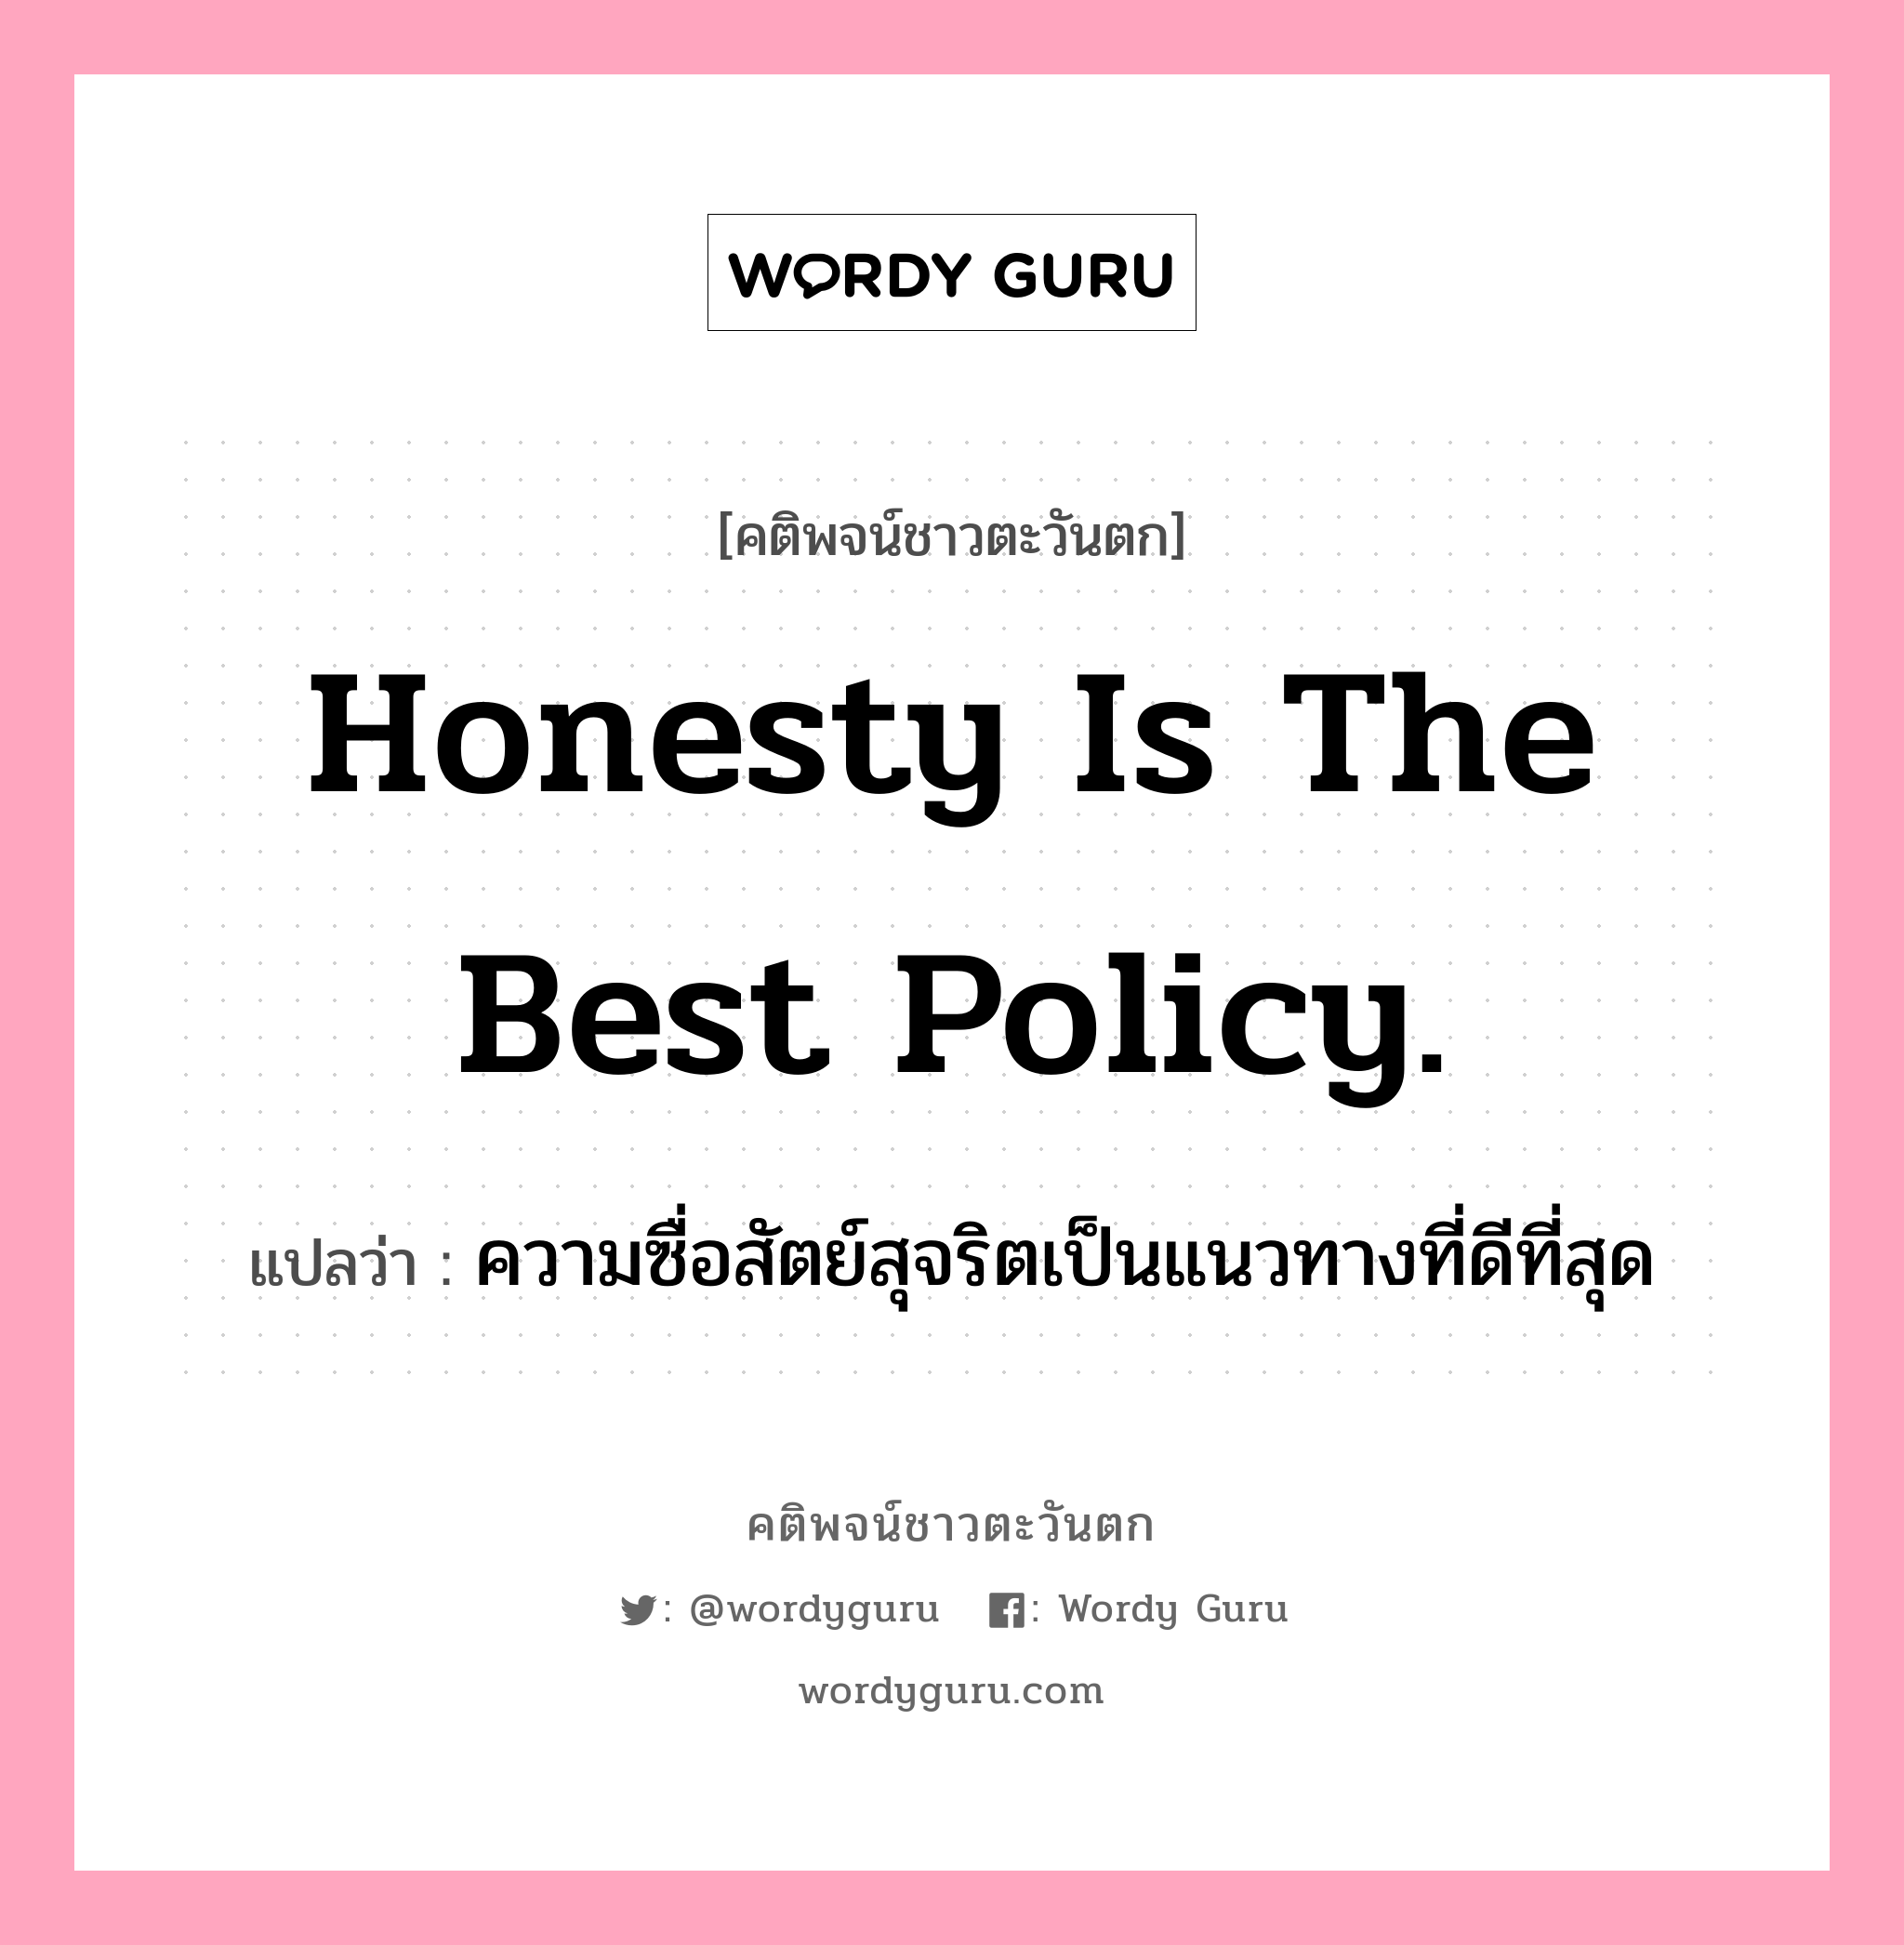 Honesty is the best policy., คติพจน์ชาวตะวันตก Honesty is the best policy. แปลว่า ความซื่อสัตย์สุจริตเป็นแนวทางที่ดีที่สุด